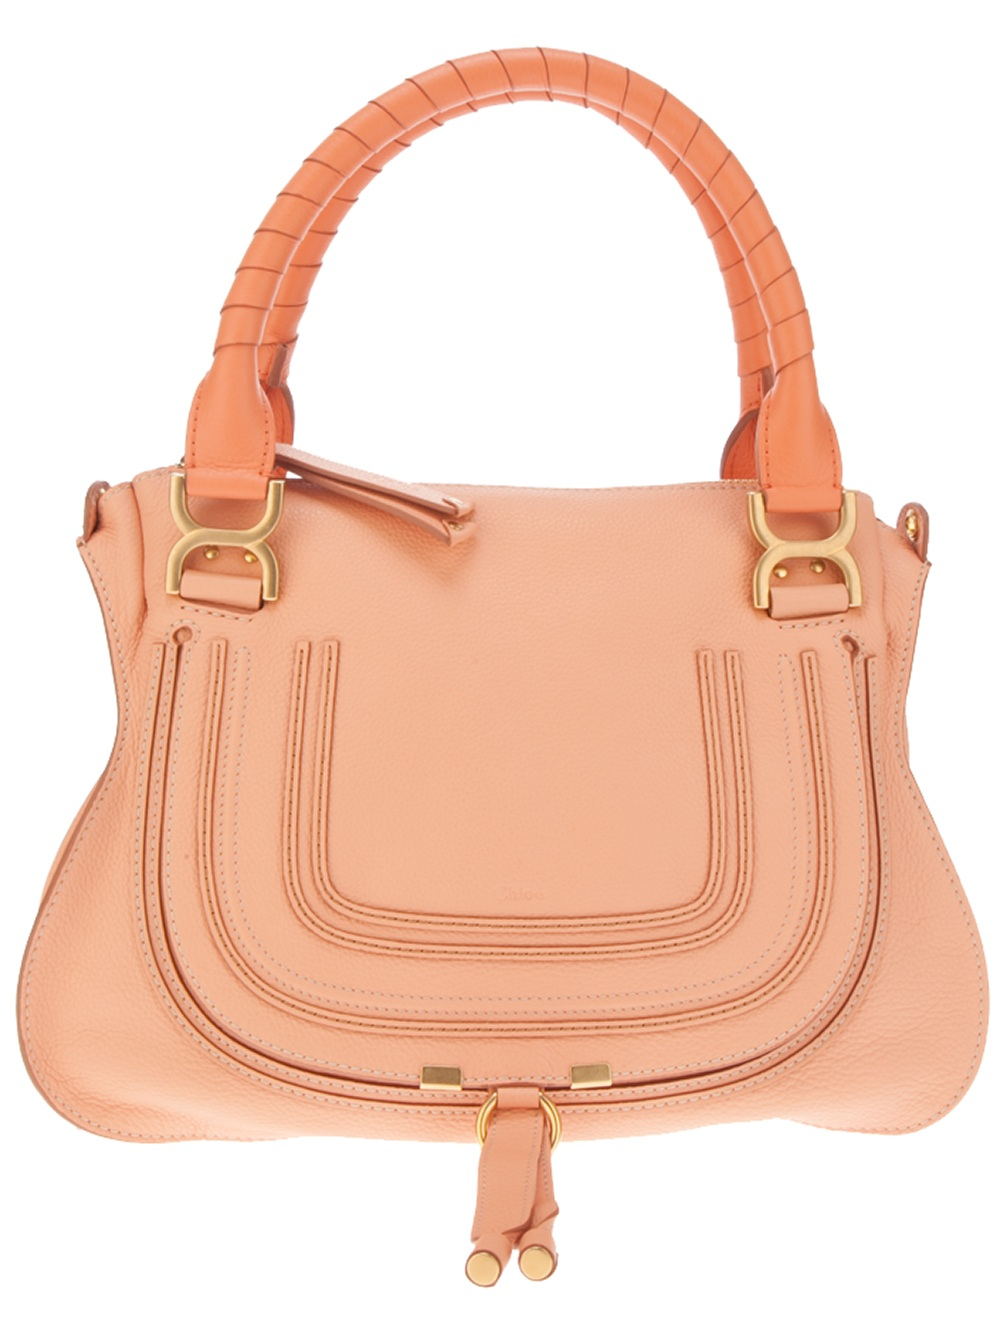 Lyst - Chloé Saddle Bag in Pink